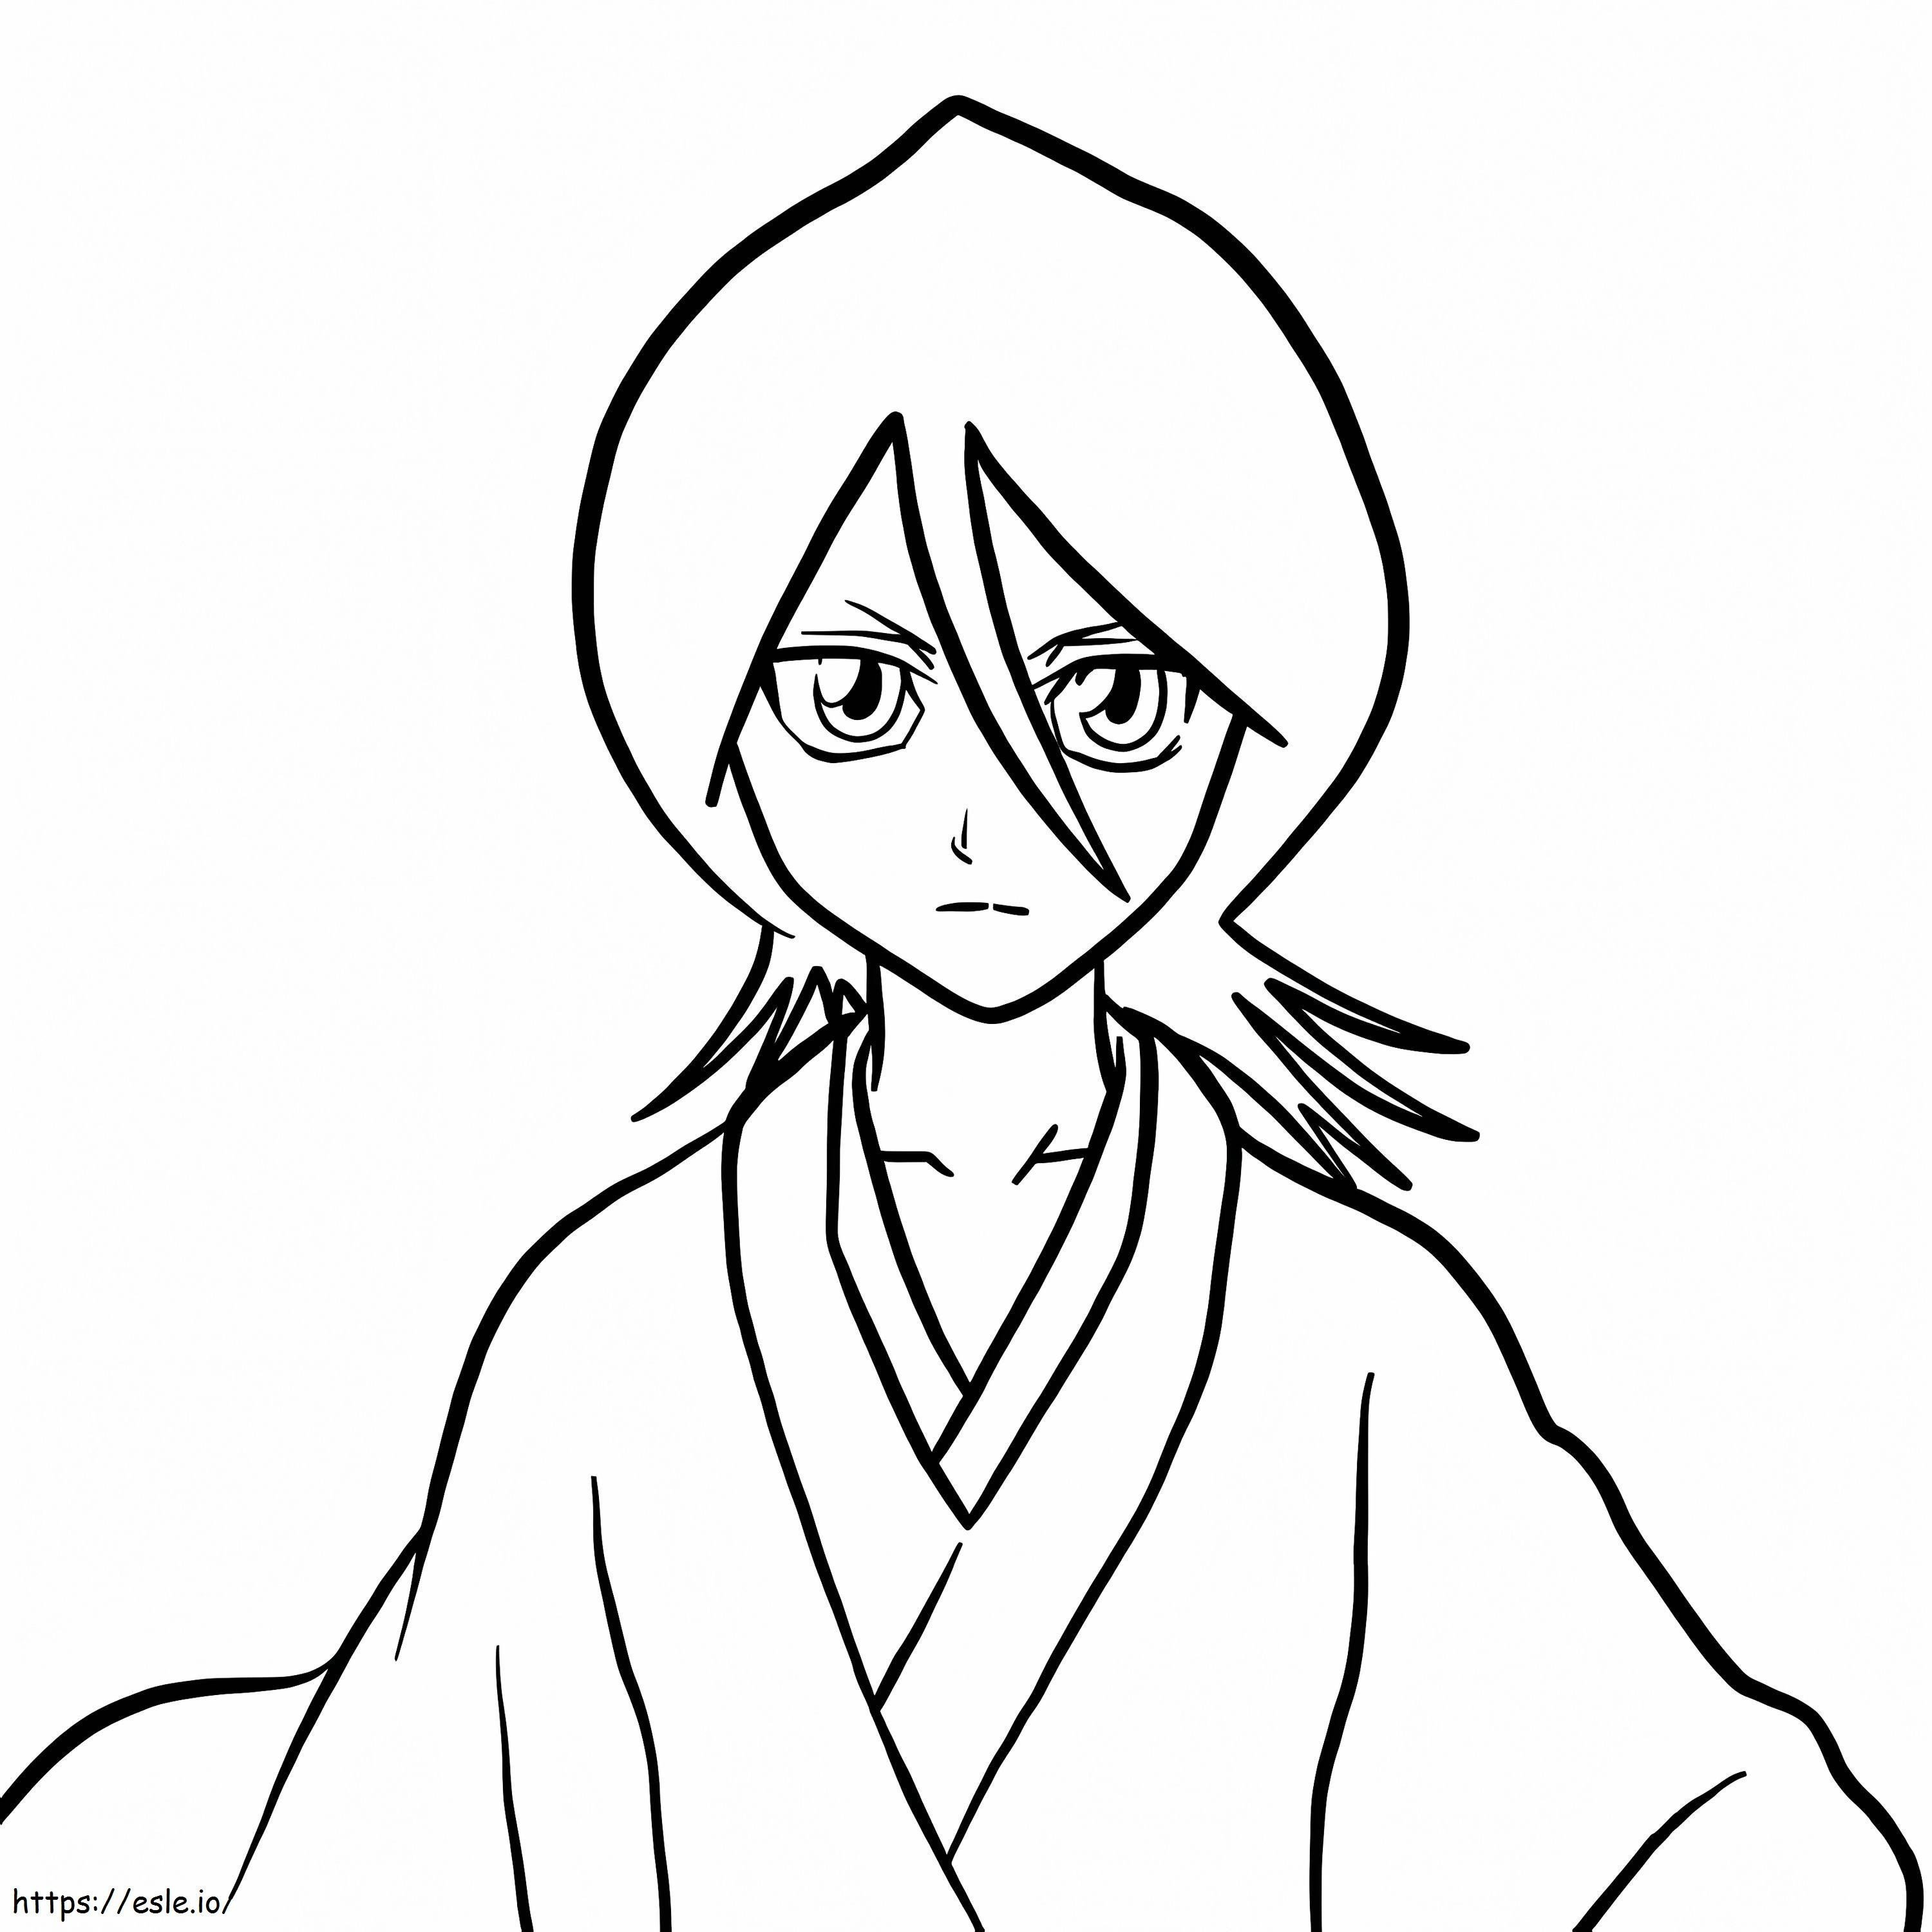 Kuchiki Rukia From Bleach coloring page